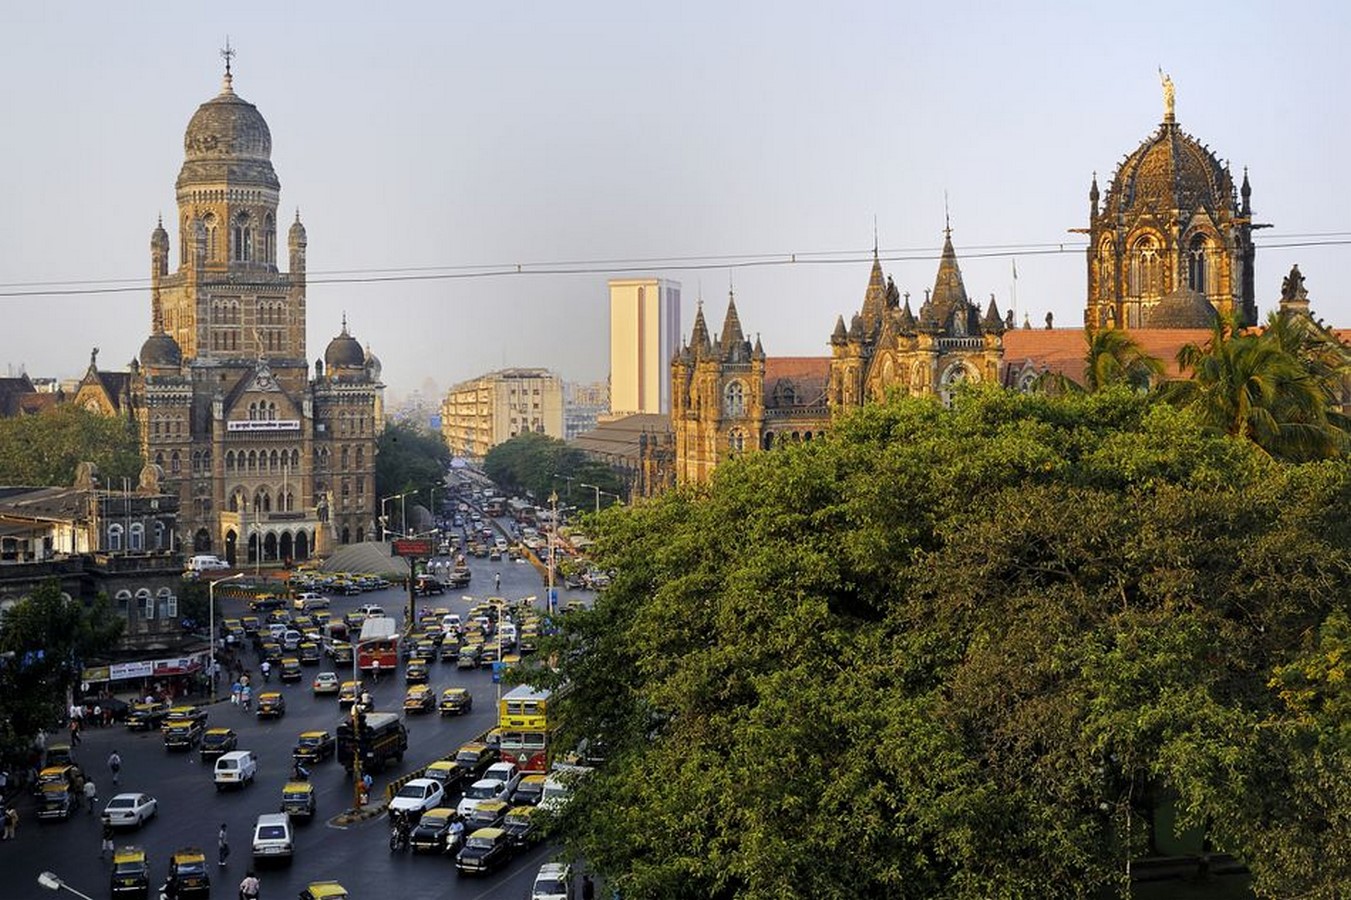 Mumbai Architecture- A dream or a nightmare? - Sheet1